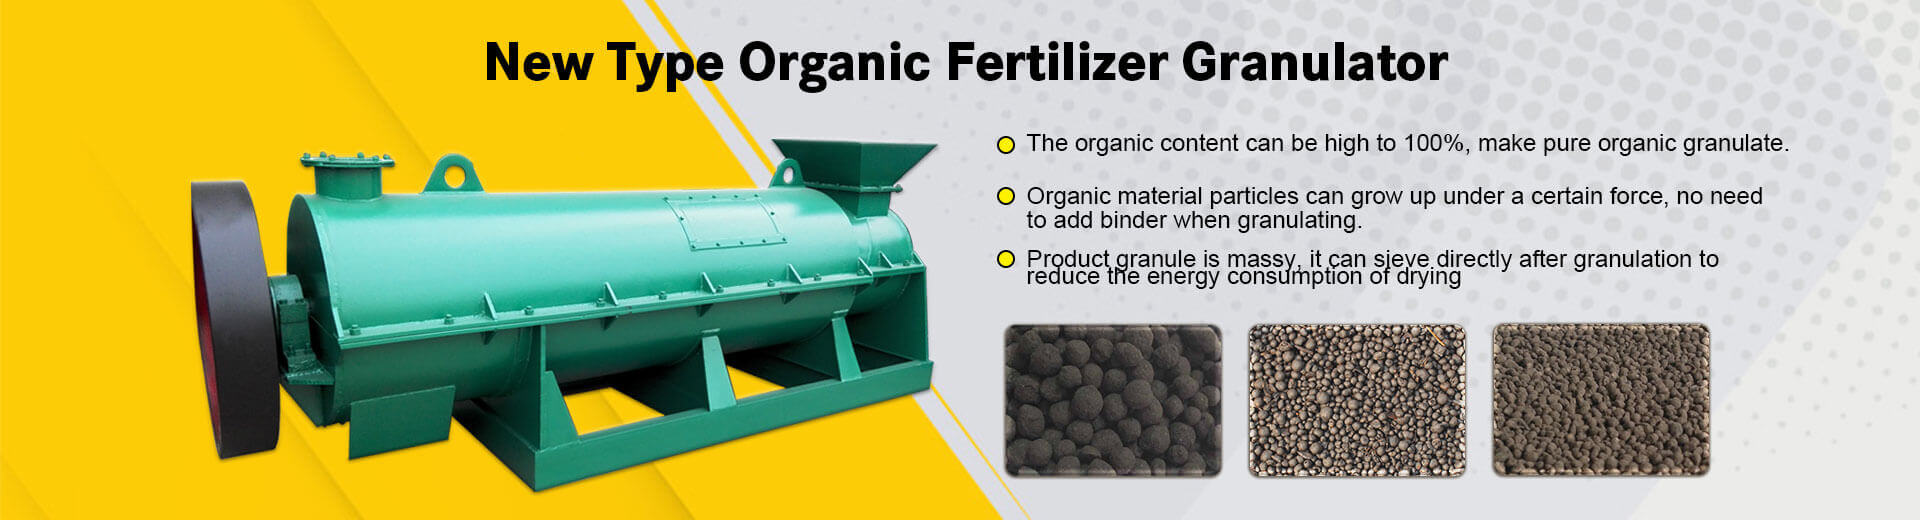 New Type Organic Fertilizer Granulator